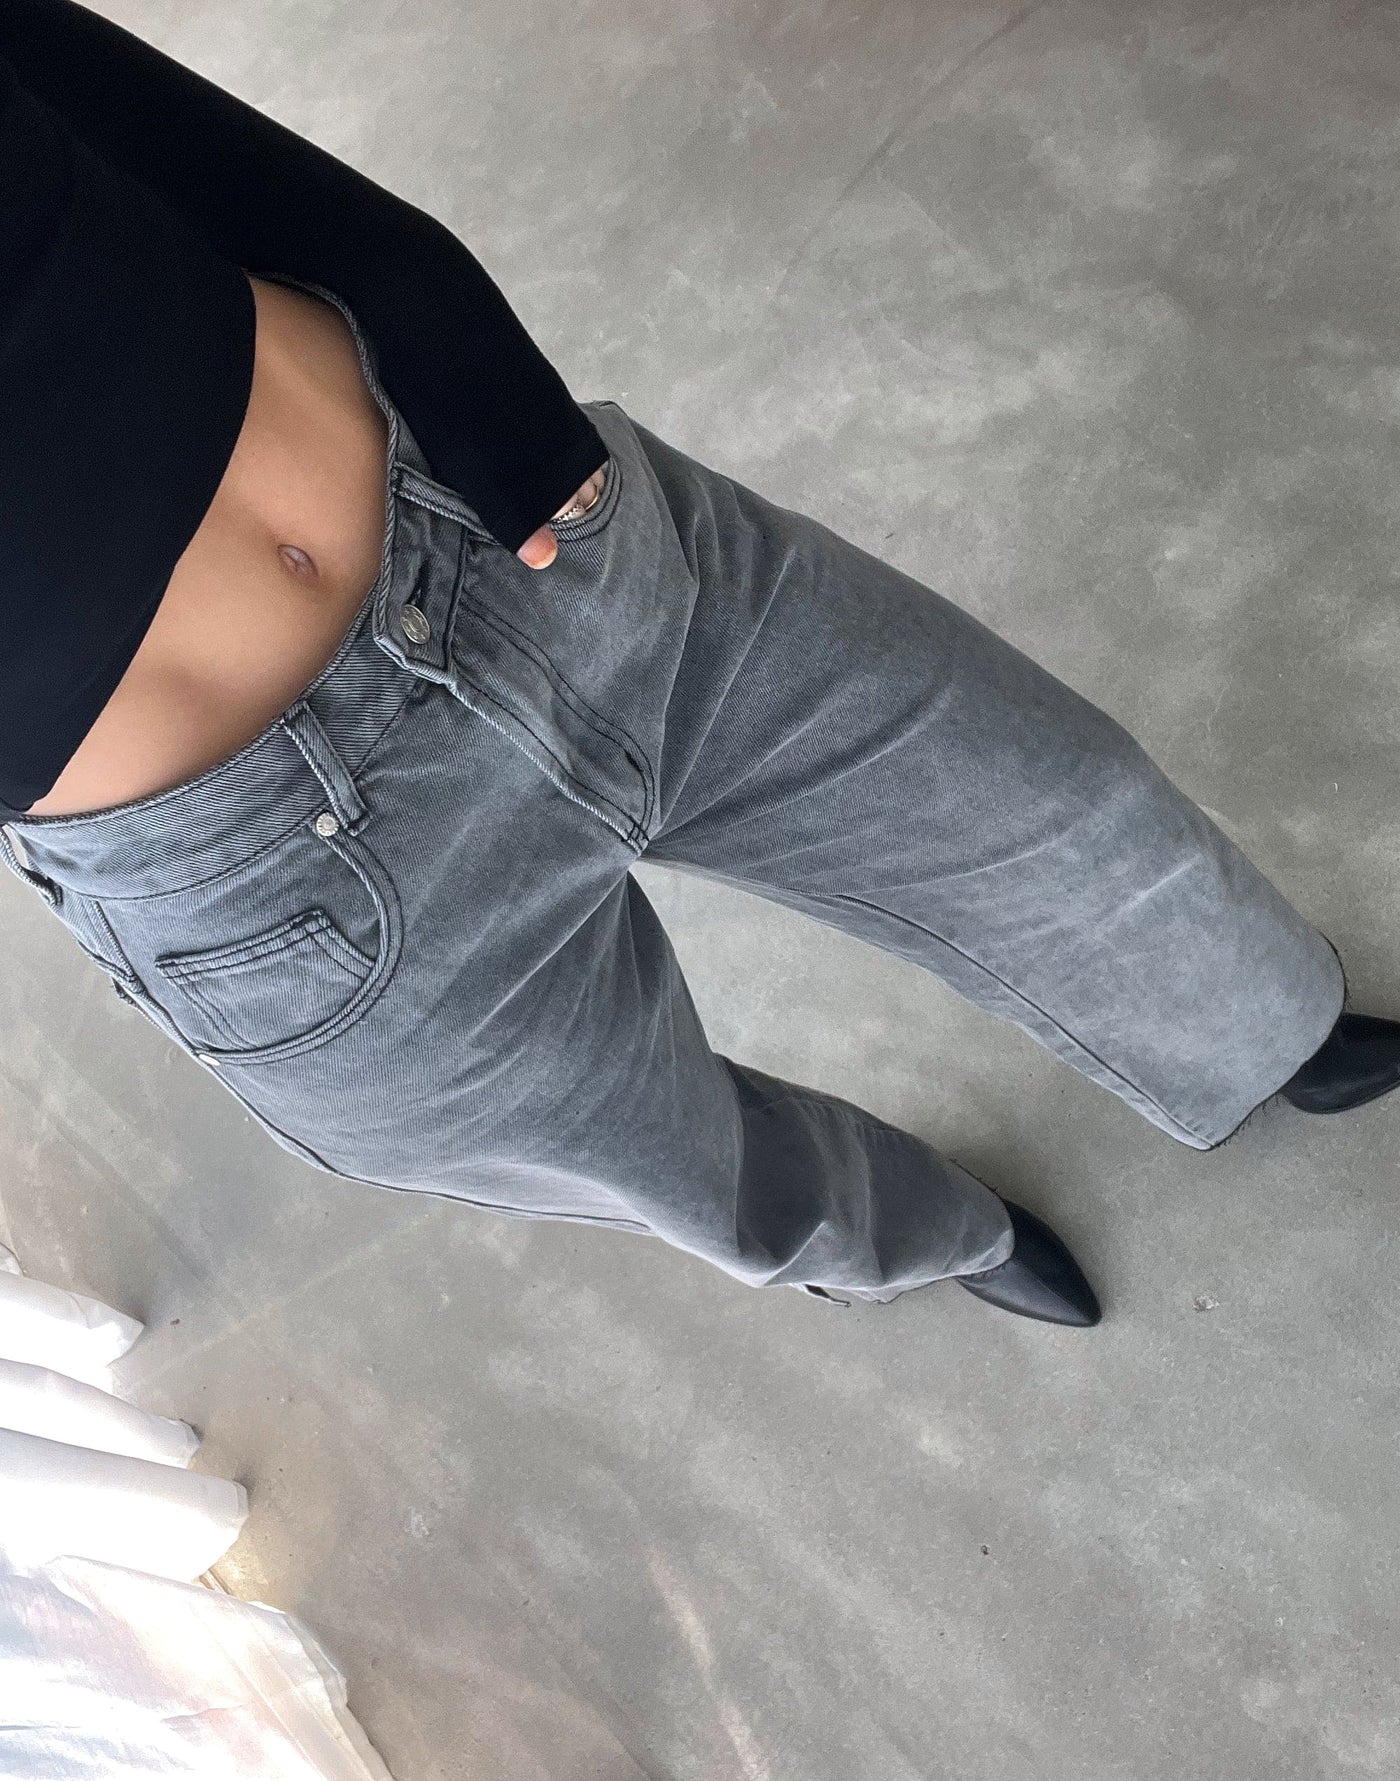 Tommy Jeans (Acid Wash) - Grey Acid Wash Denim Jeans With Splits - Women's Pants - Charcoal Clothing